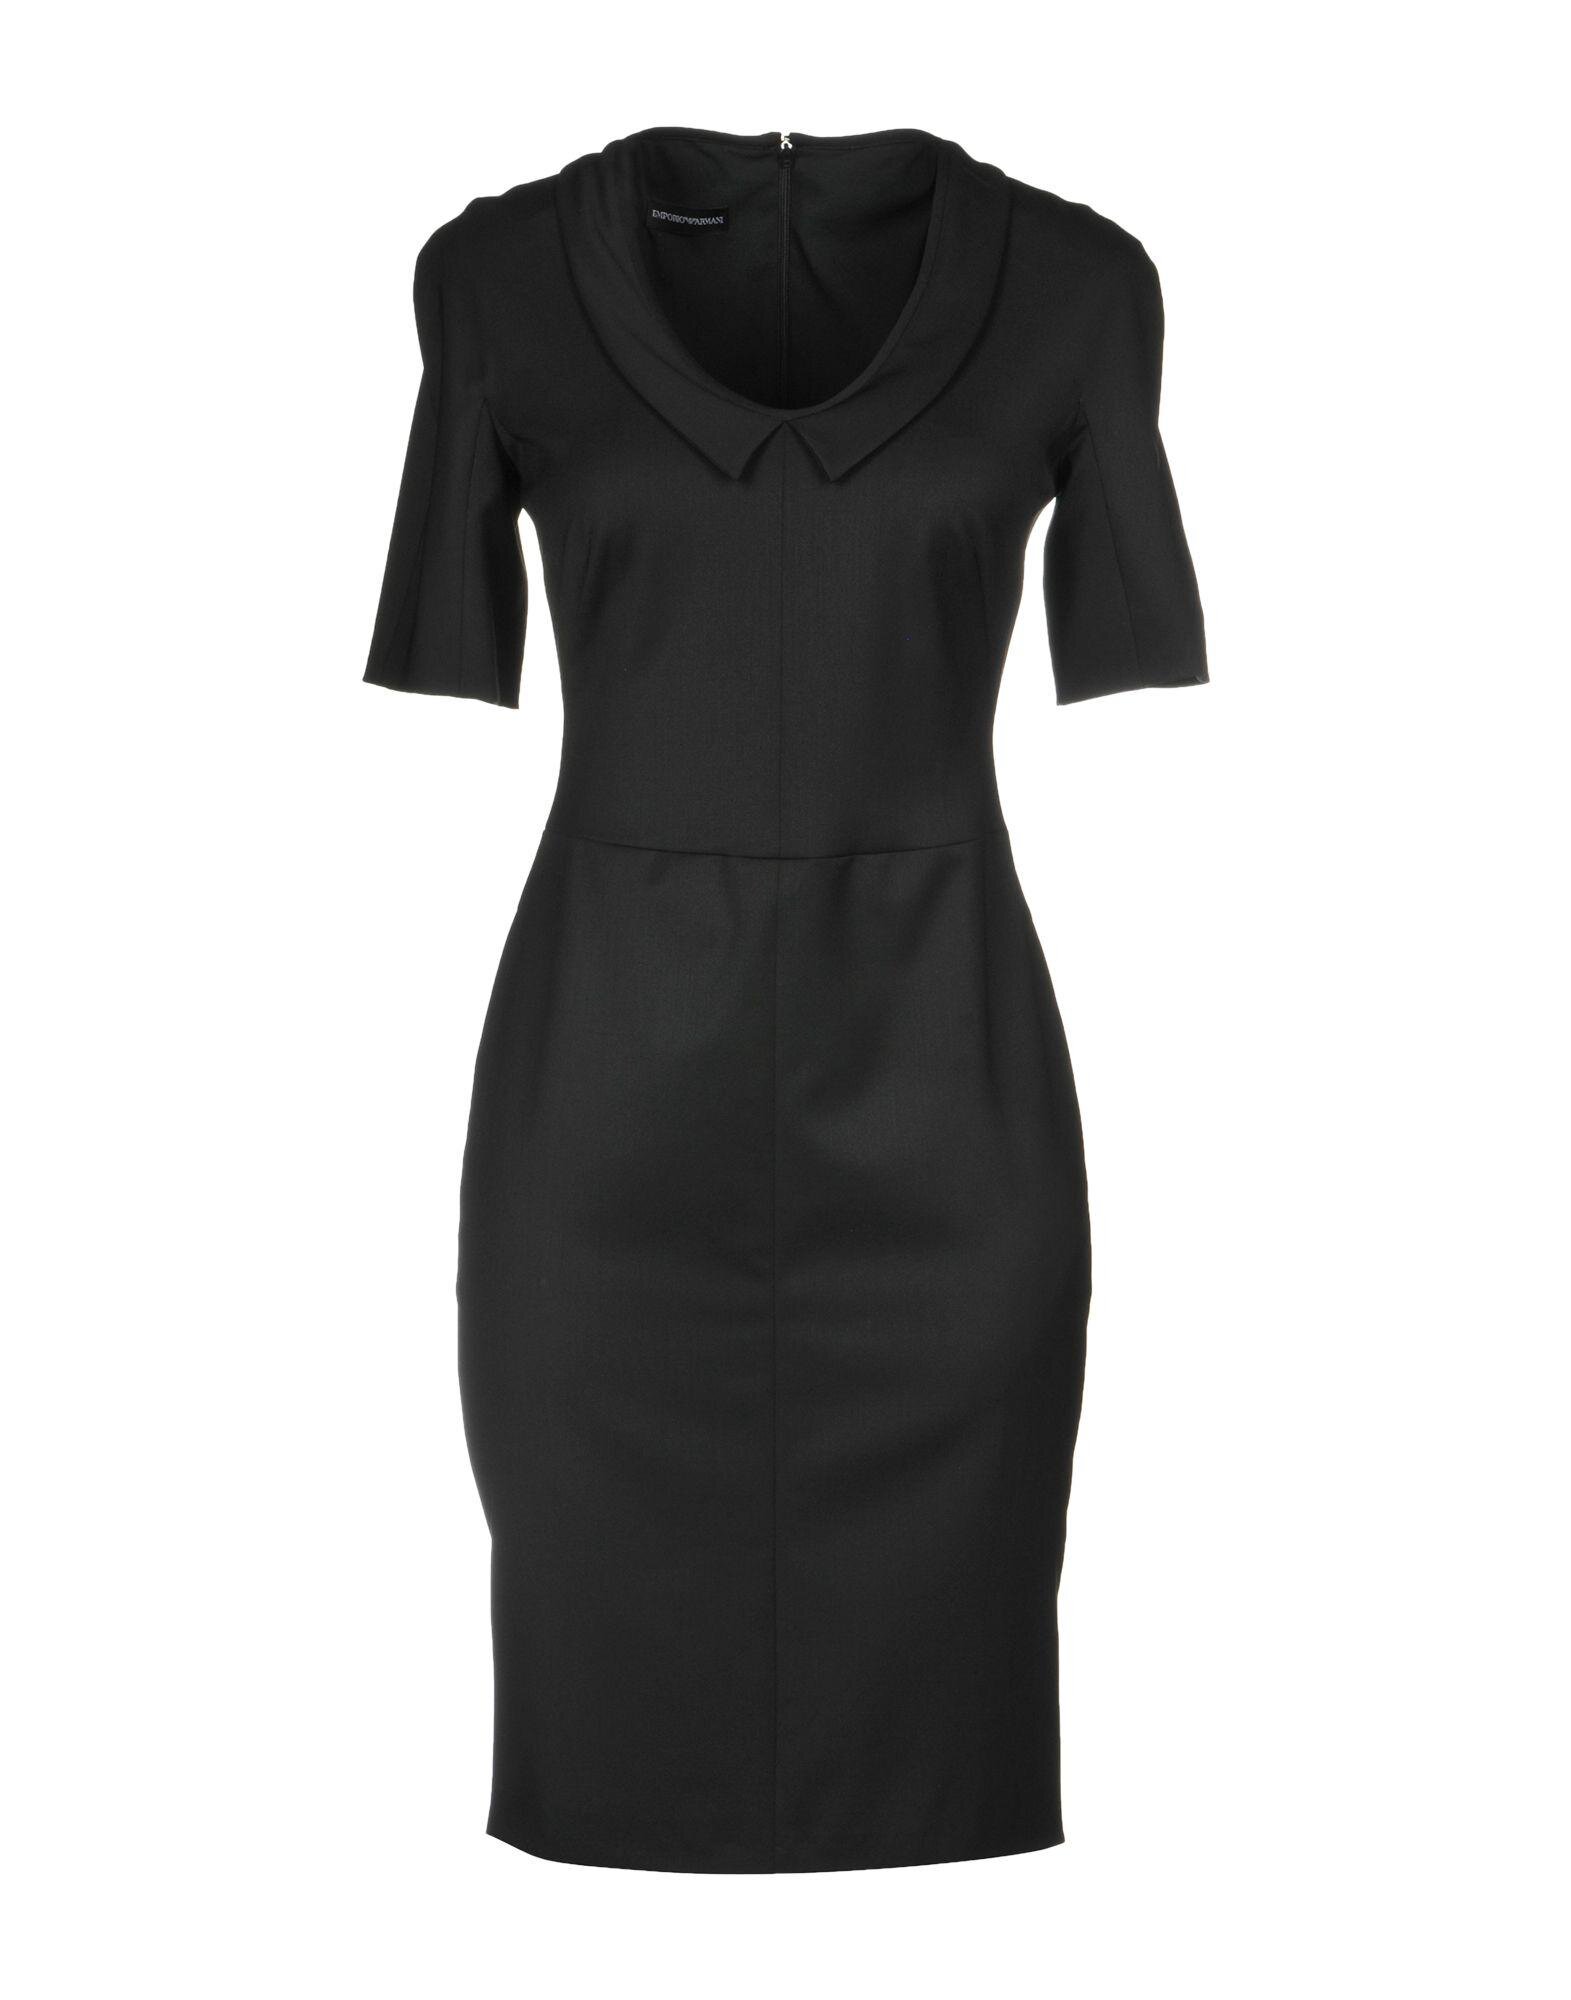 Emporio Armani Pencil Dress with Flat Collar in Black.jpg